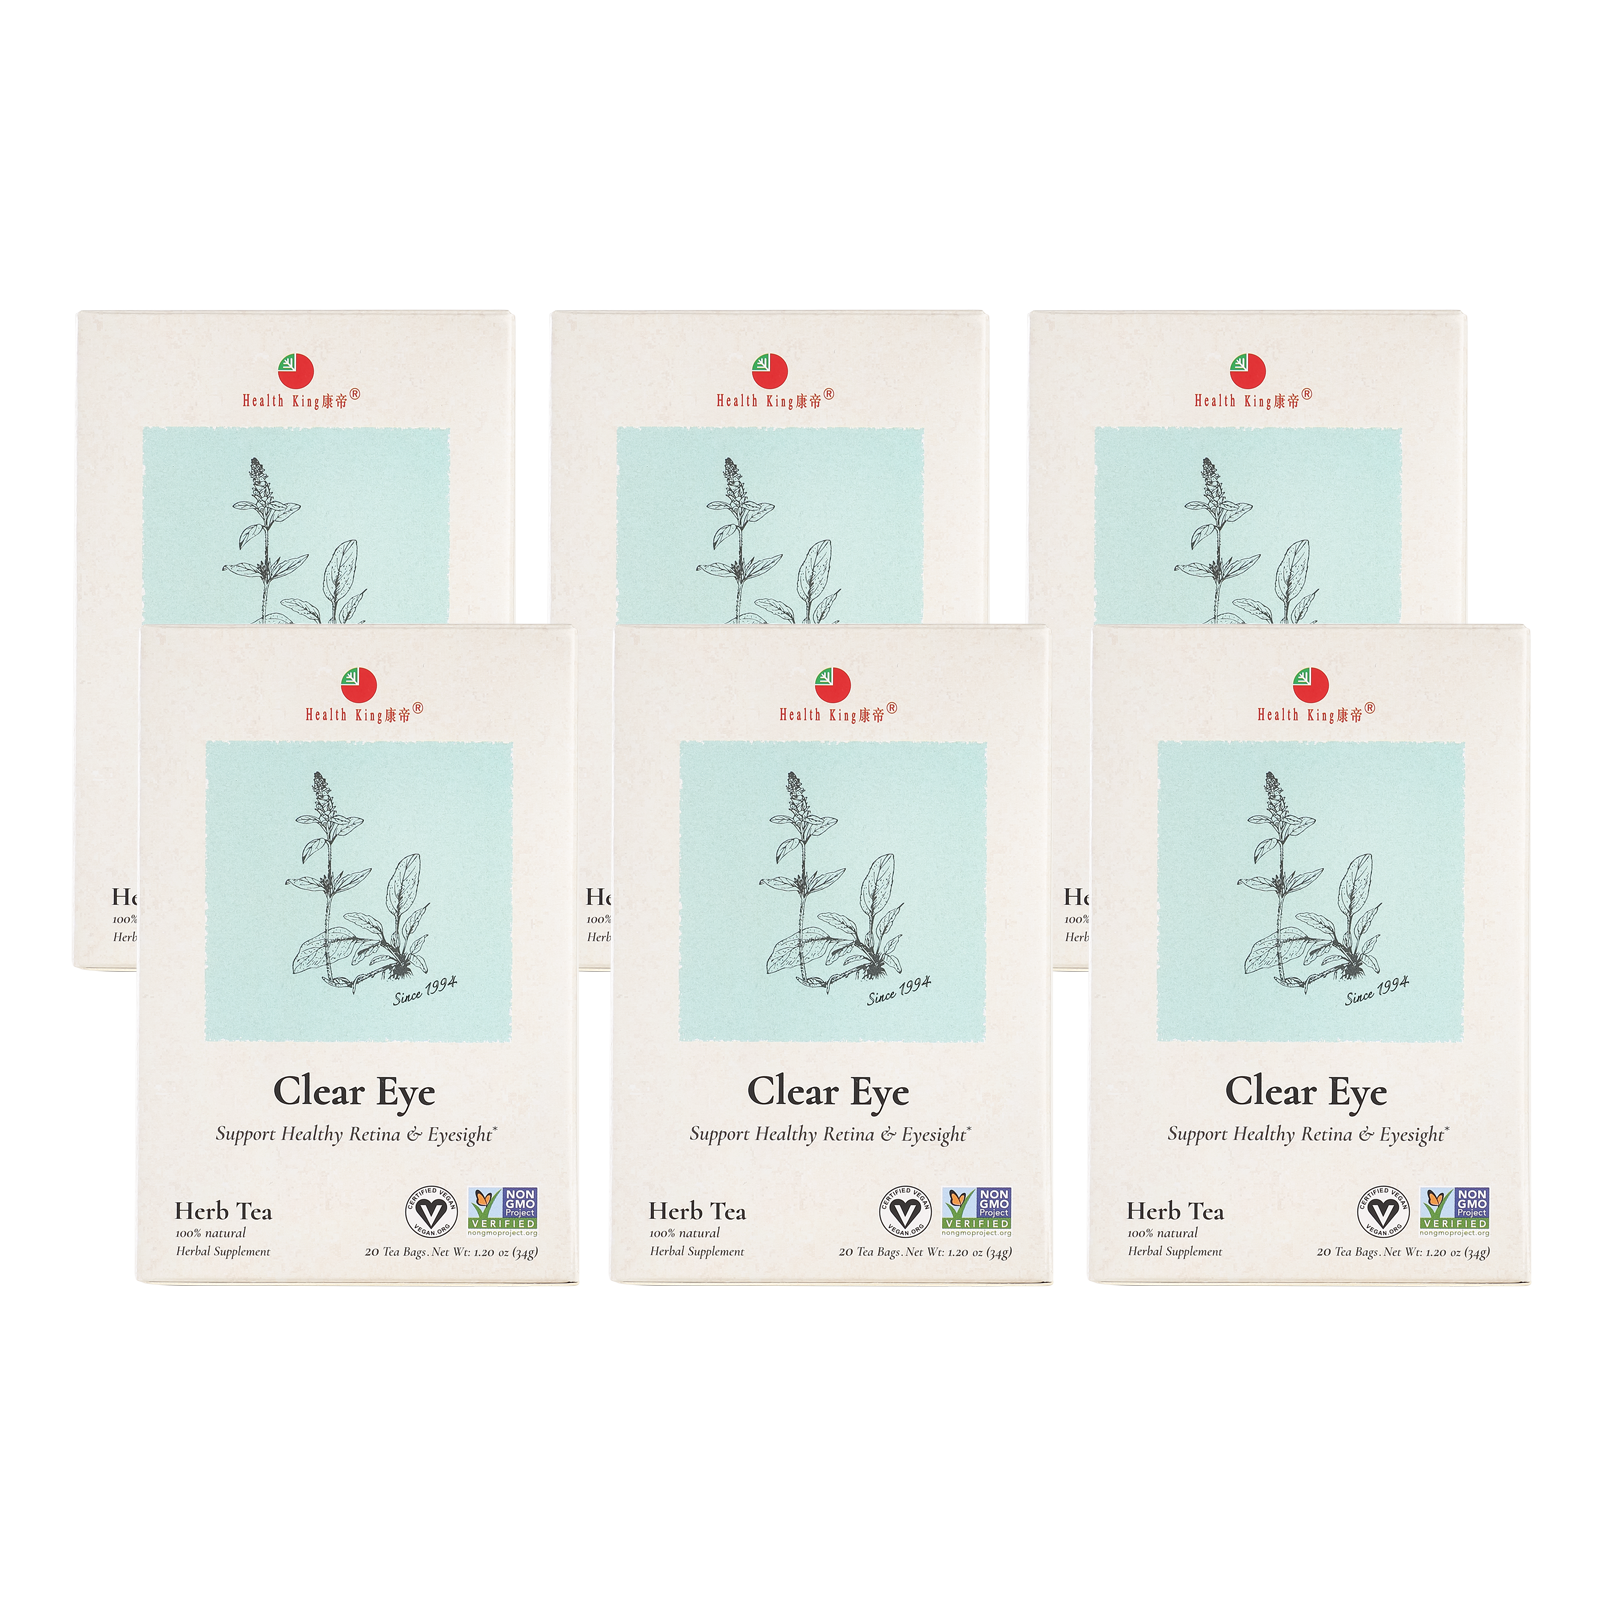 Six-pack set of Clear Eye Herb Tea boxes